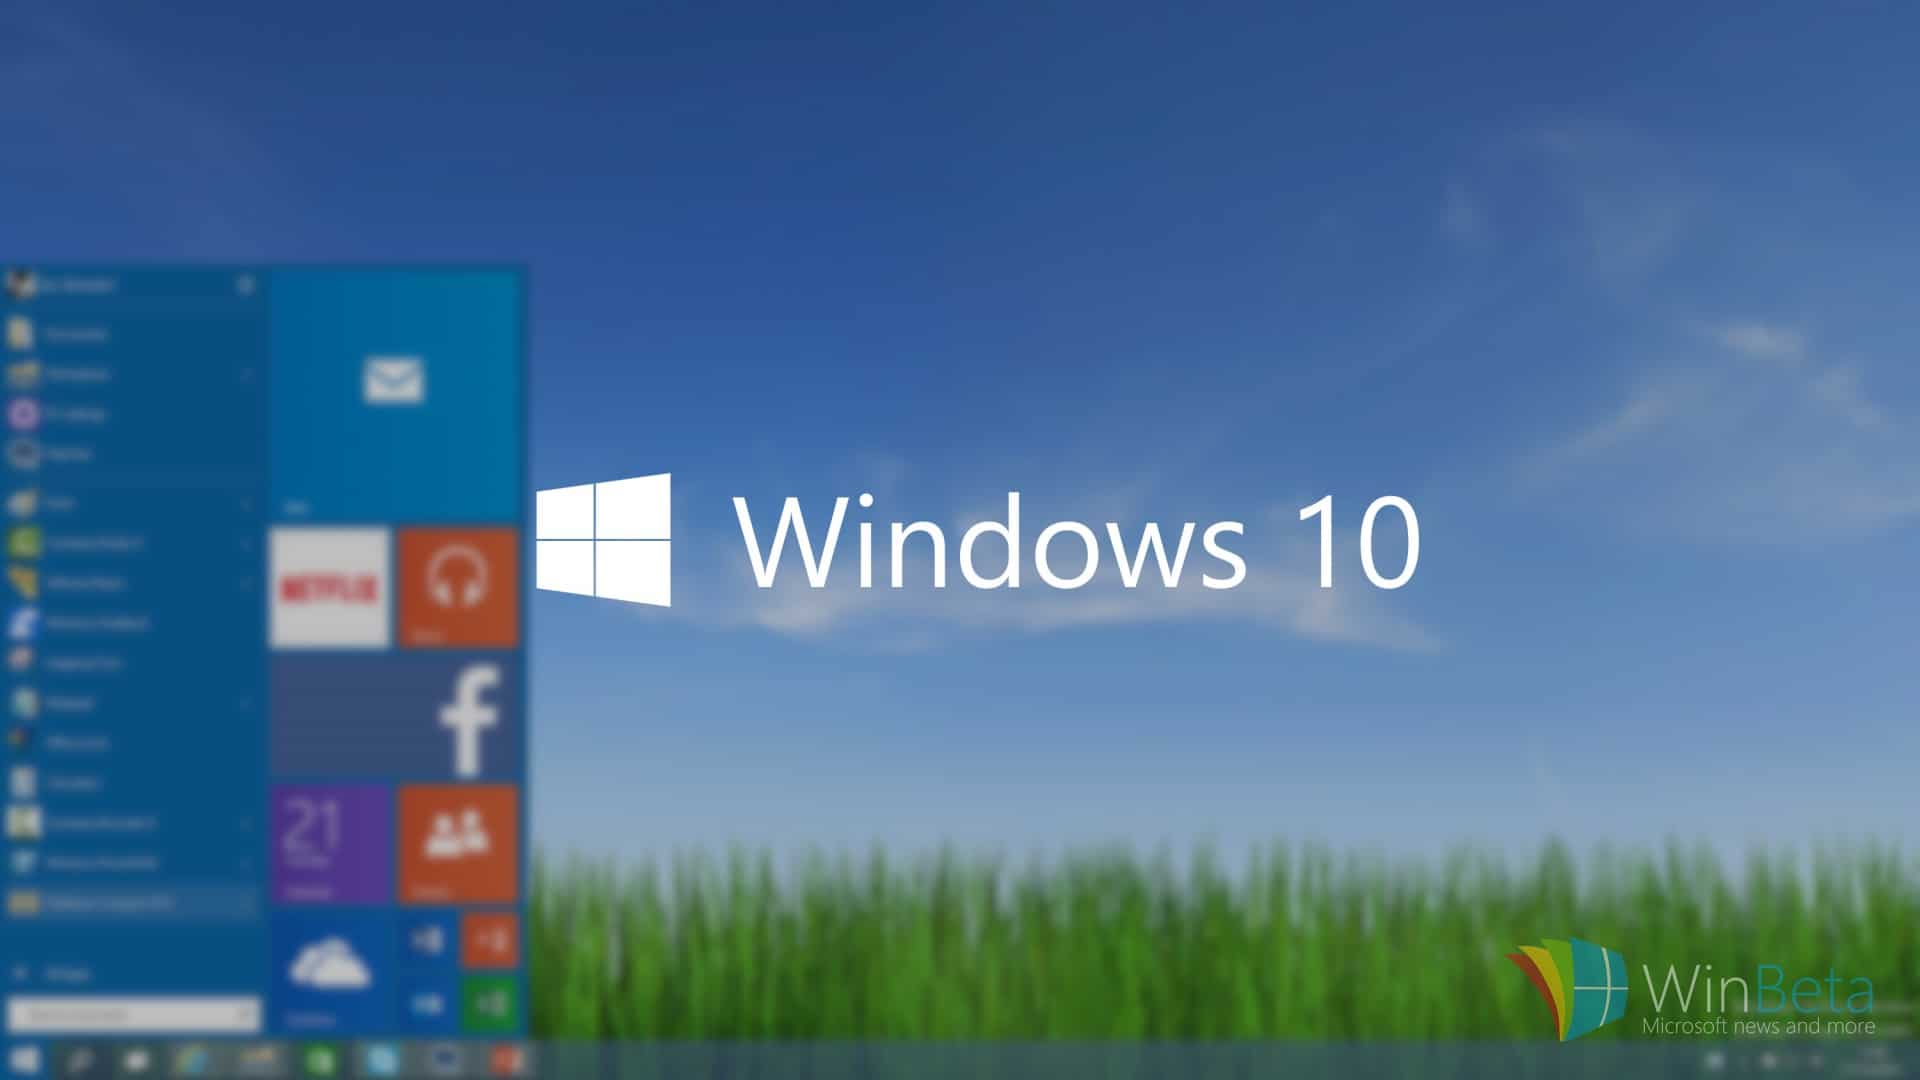 Windows 10 Free Upgrade – Codenamed Threshold